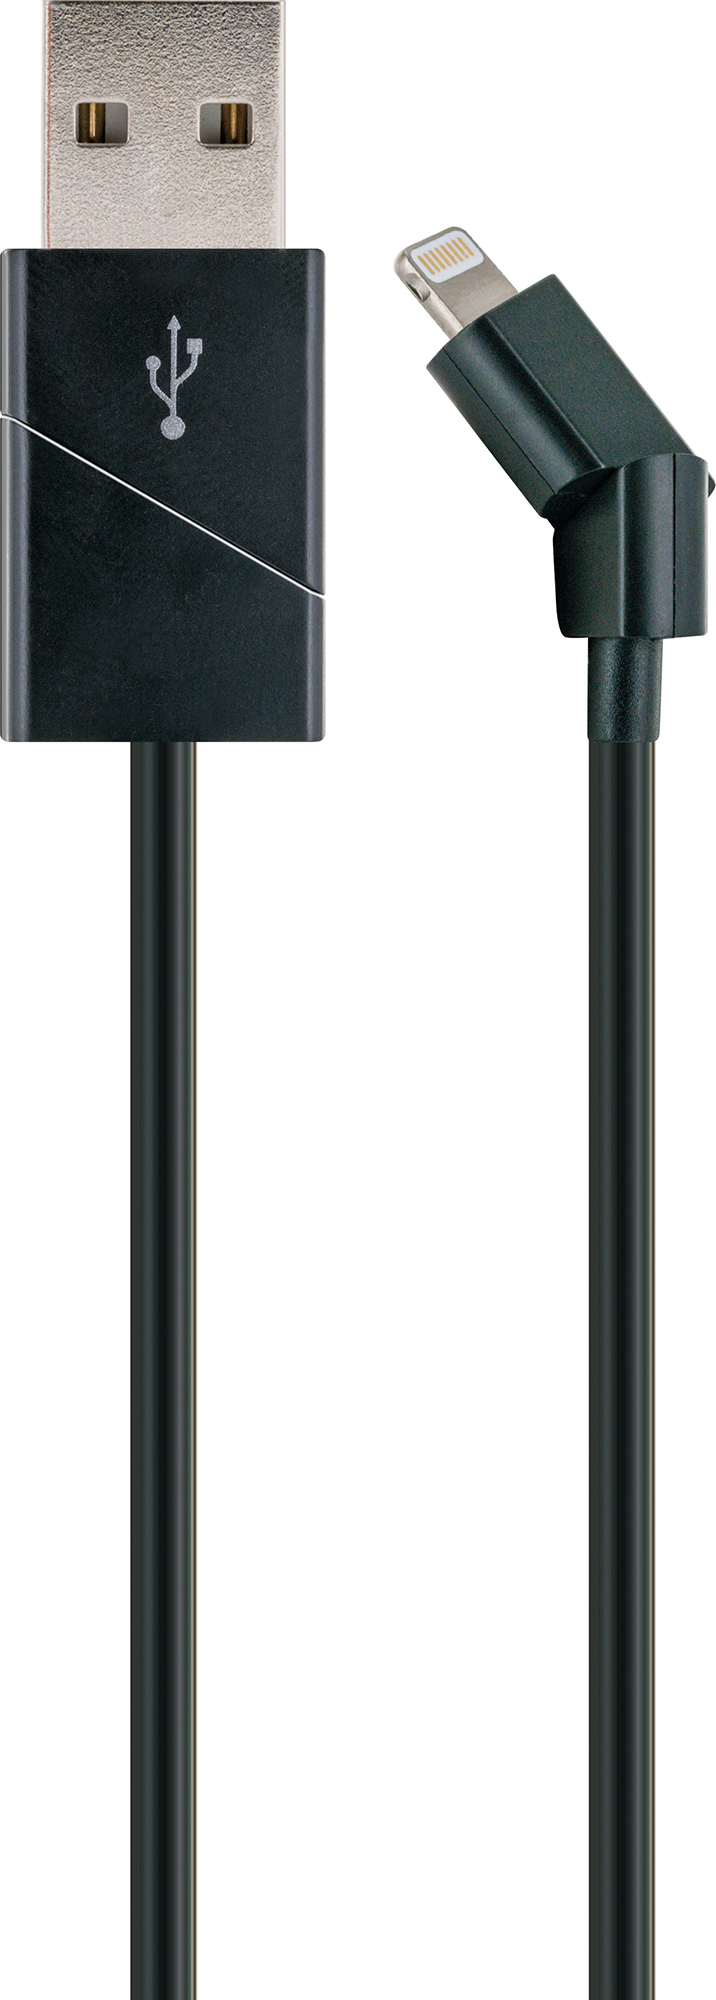 SCHWAIGER -LKW120L 533-, Apple Lightning A Stecker, Ladekabel Schwarz Apple 1,2 Sync drehbar & zu Lightning 2.0 USB m, Stecker